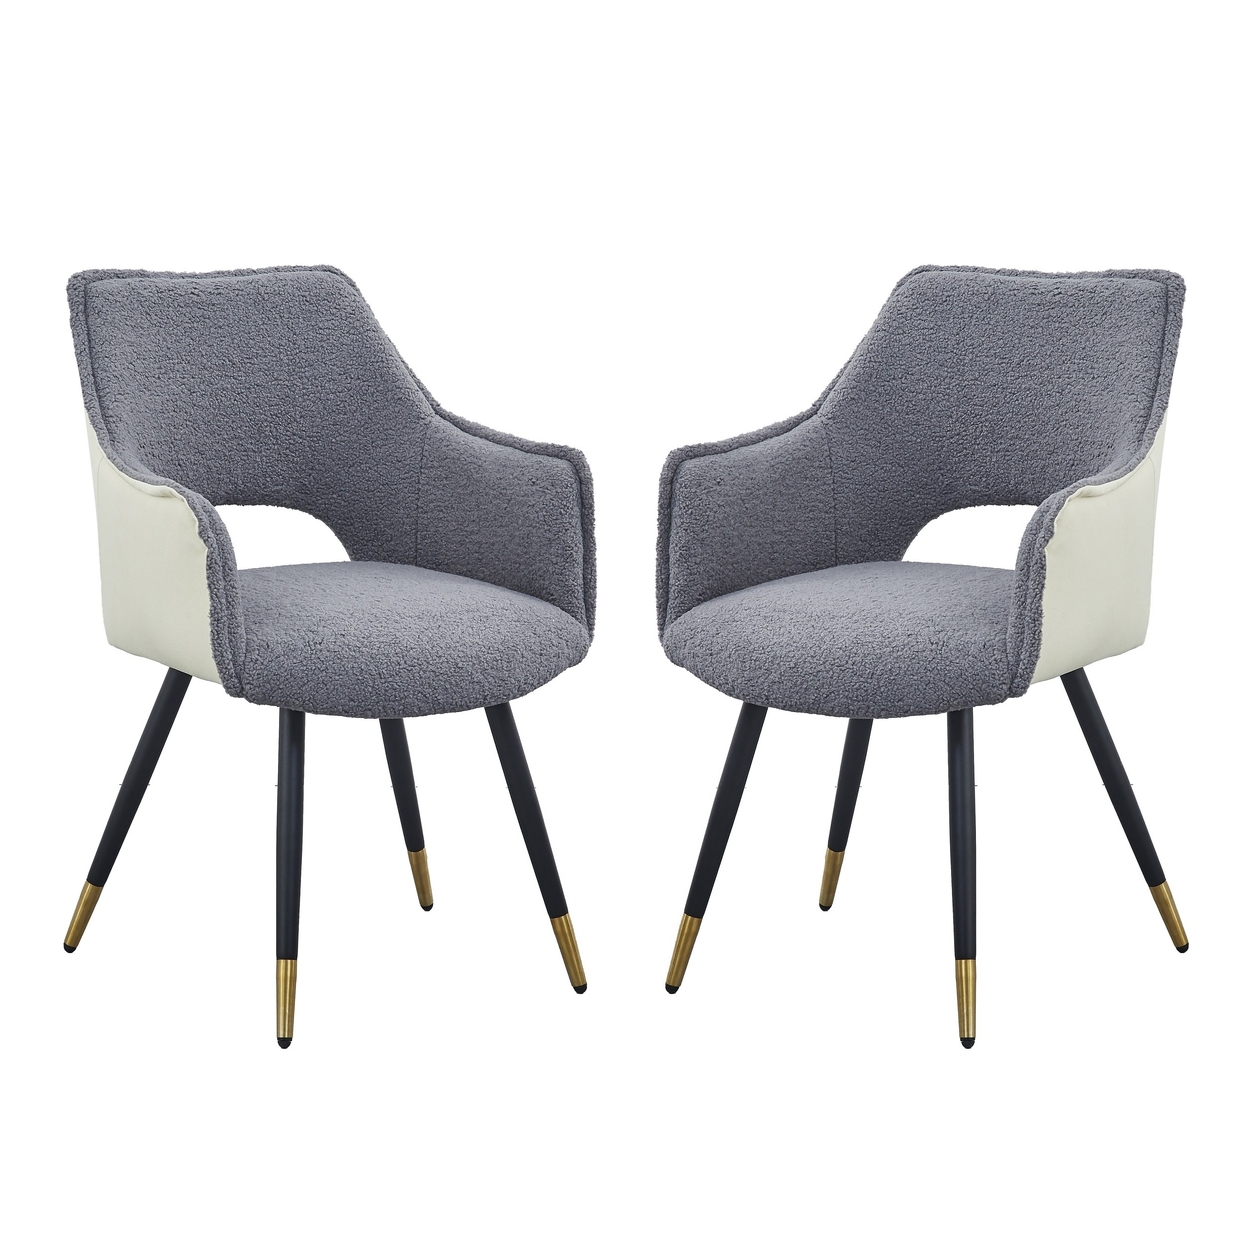 Eden 23 Inch Modern Dining Chair, Gray Fabric, Black Metal Legs, Set Of 2- Saltoro Sherpi